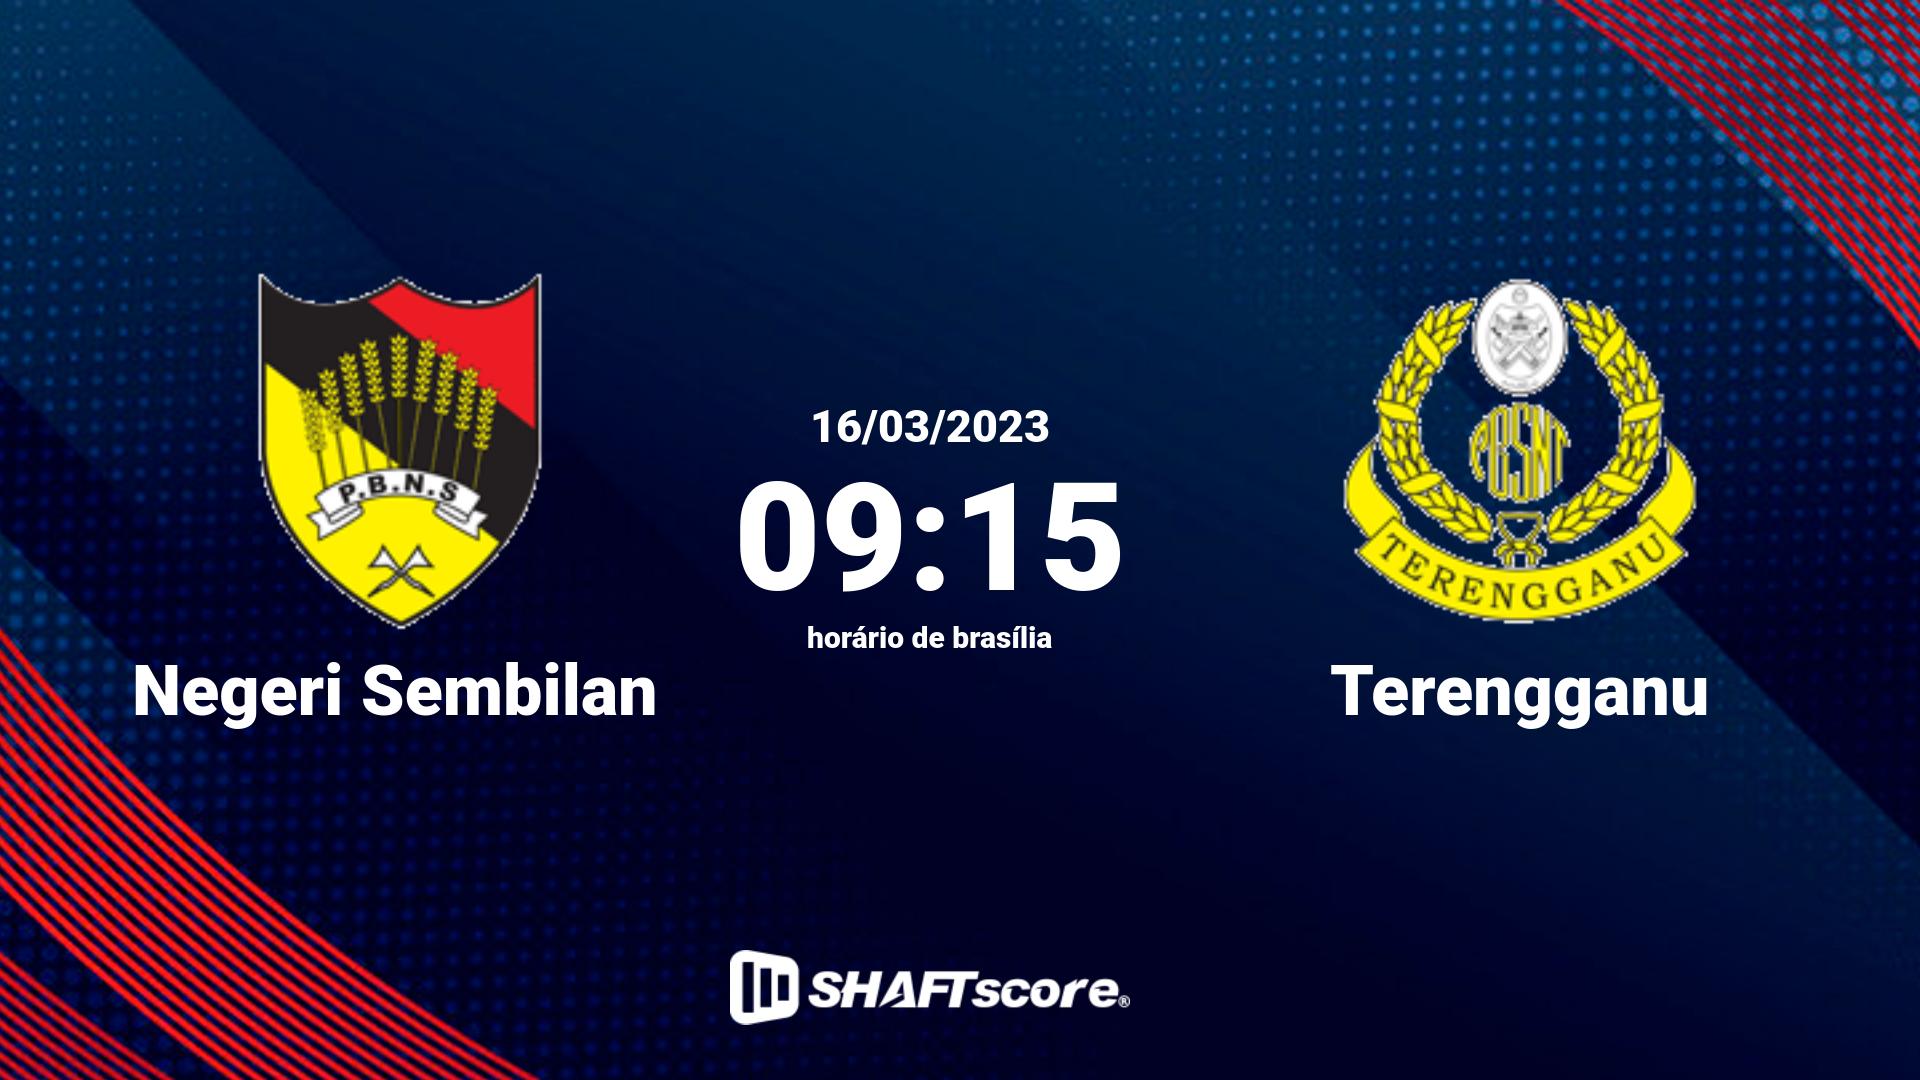 Estatísticas do jogo Negeri Sembilan vs Terengganu 16.03 09:15